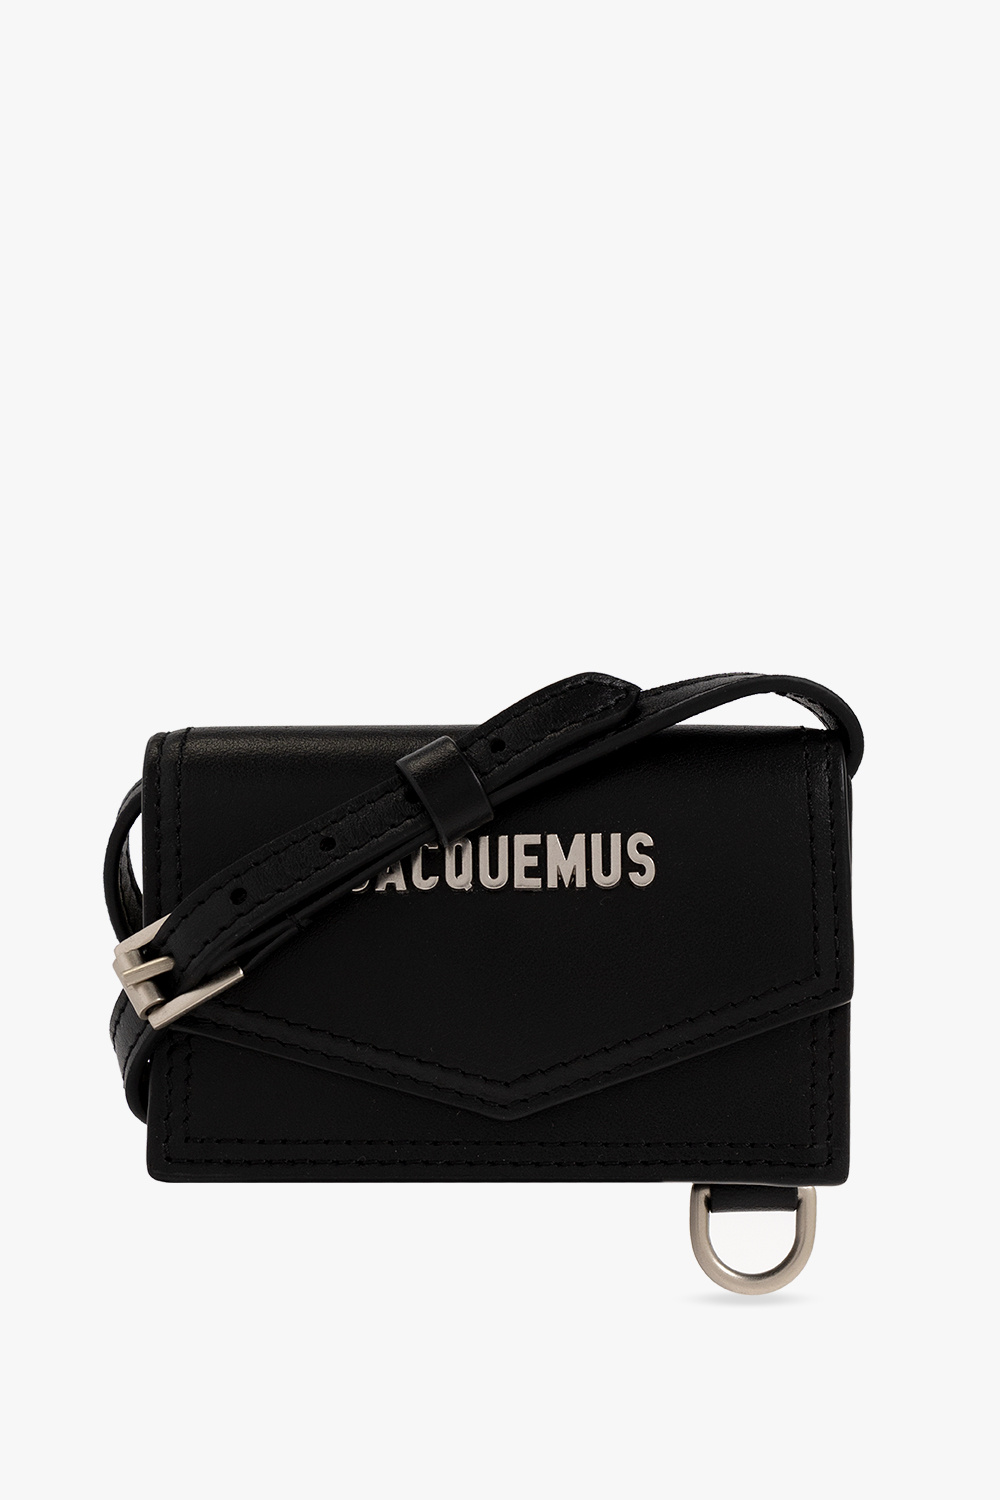 Jacquemus Le Porte Azur Leather Mini Bag In Green